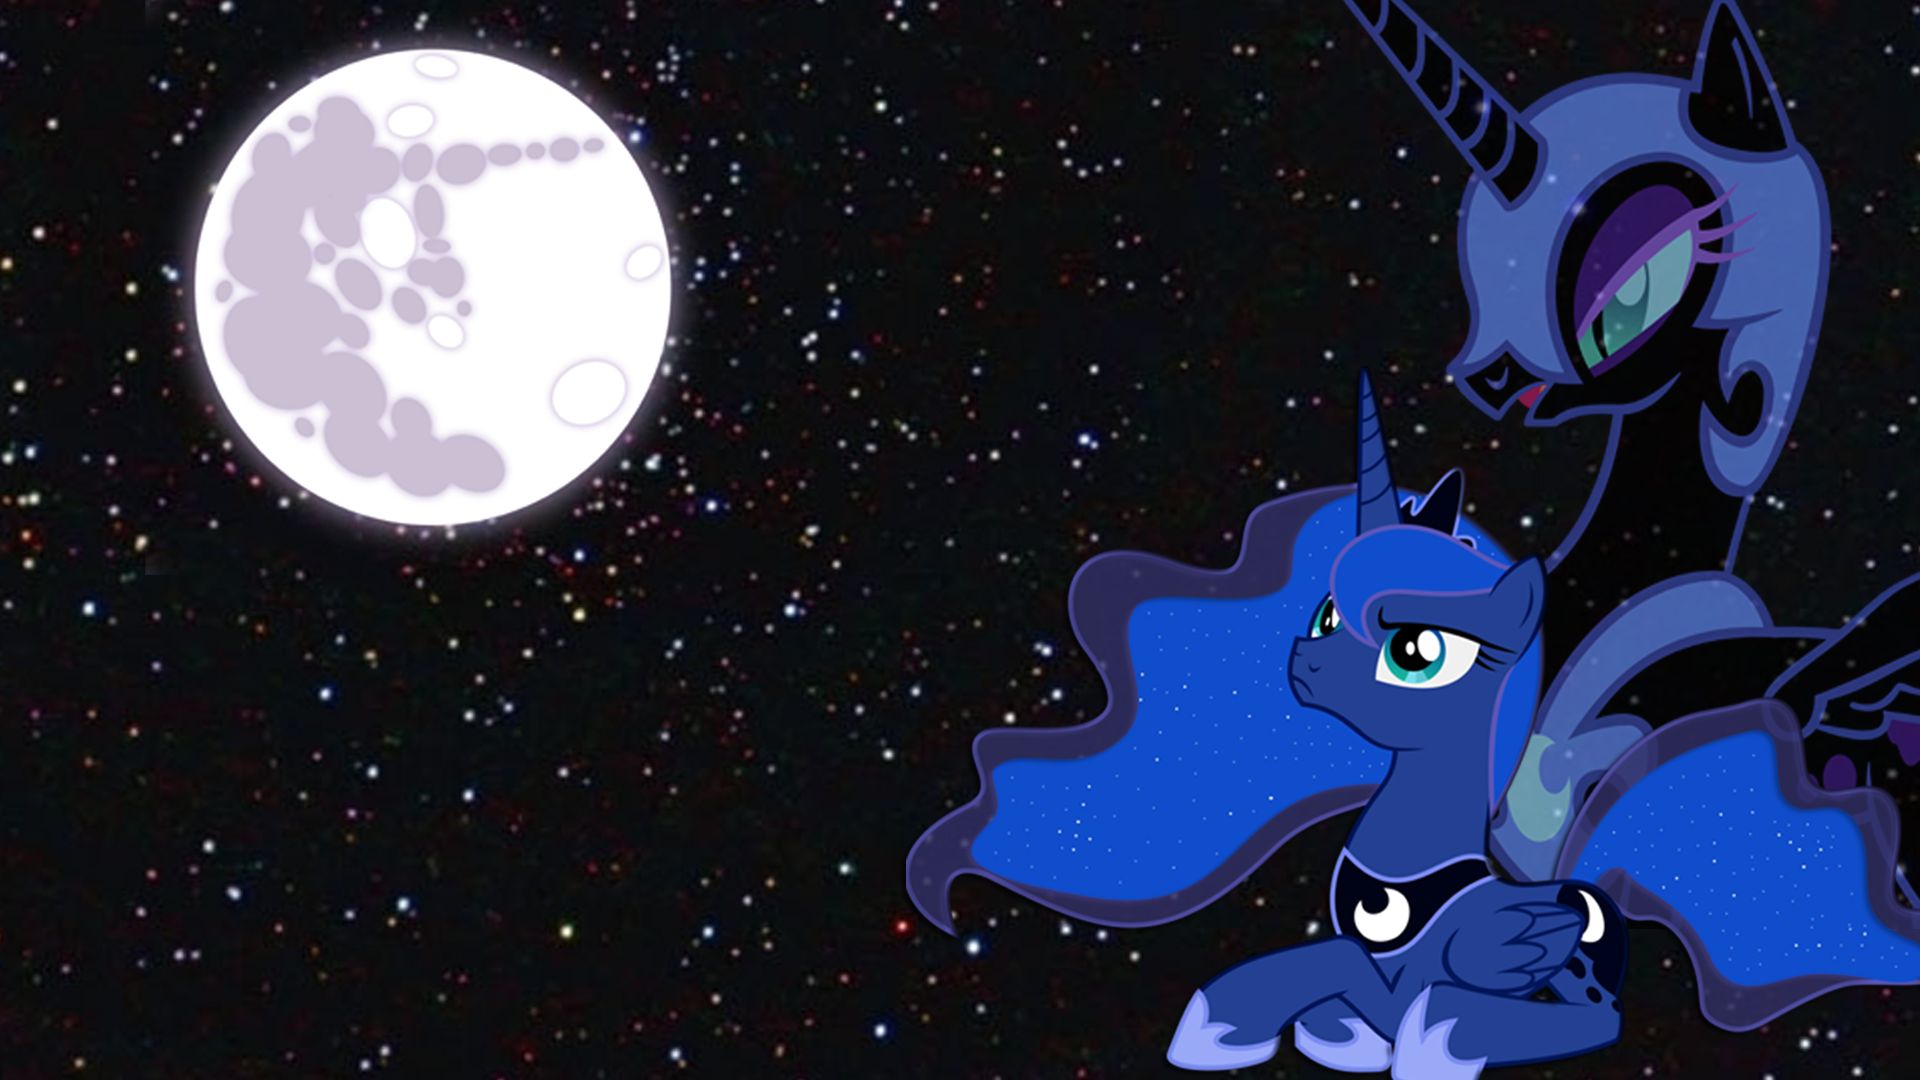 MLP:FiM Princess Luna and Nightmare moon wallpaper by Apoljak